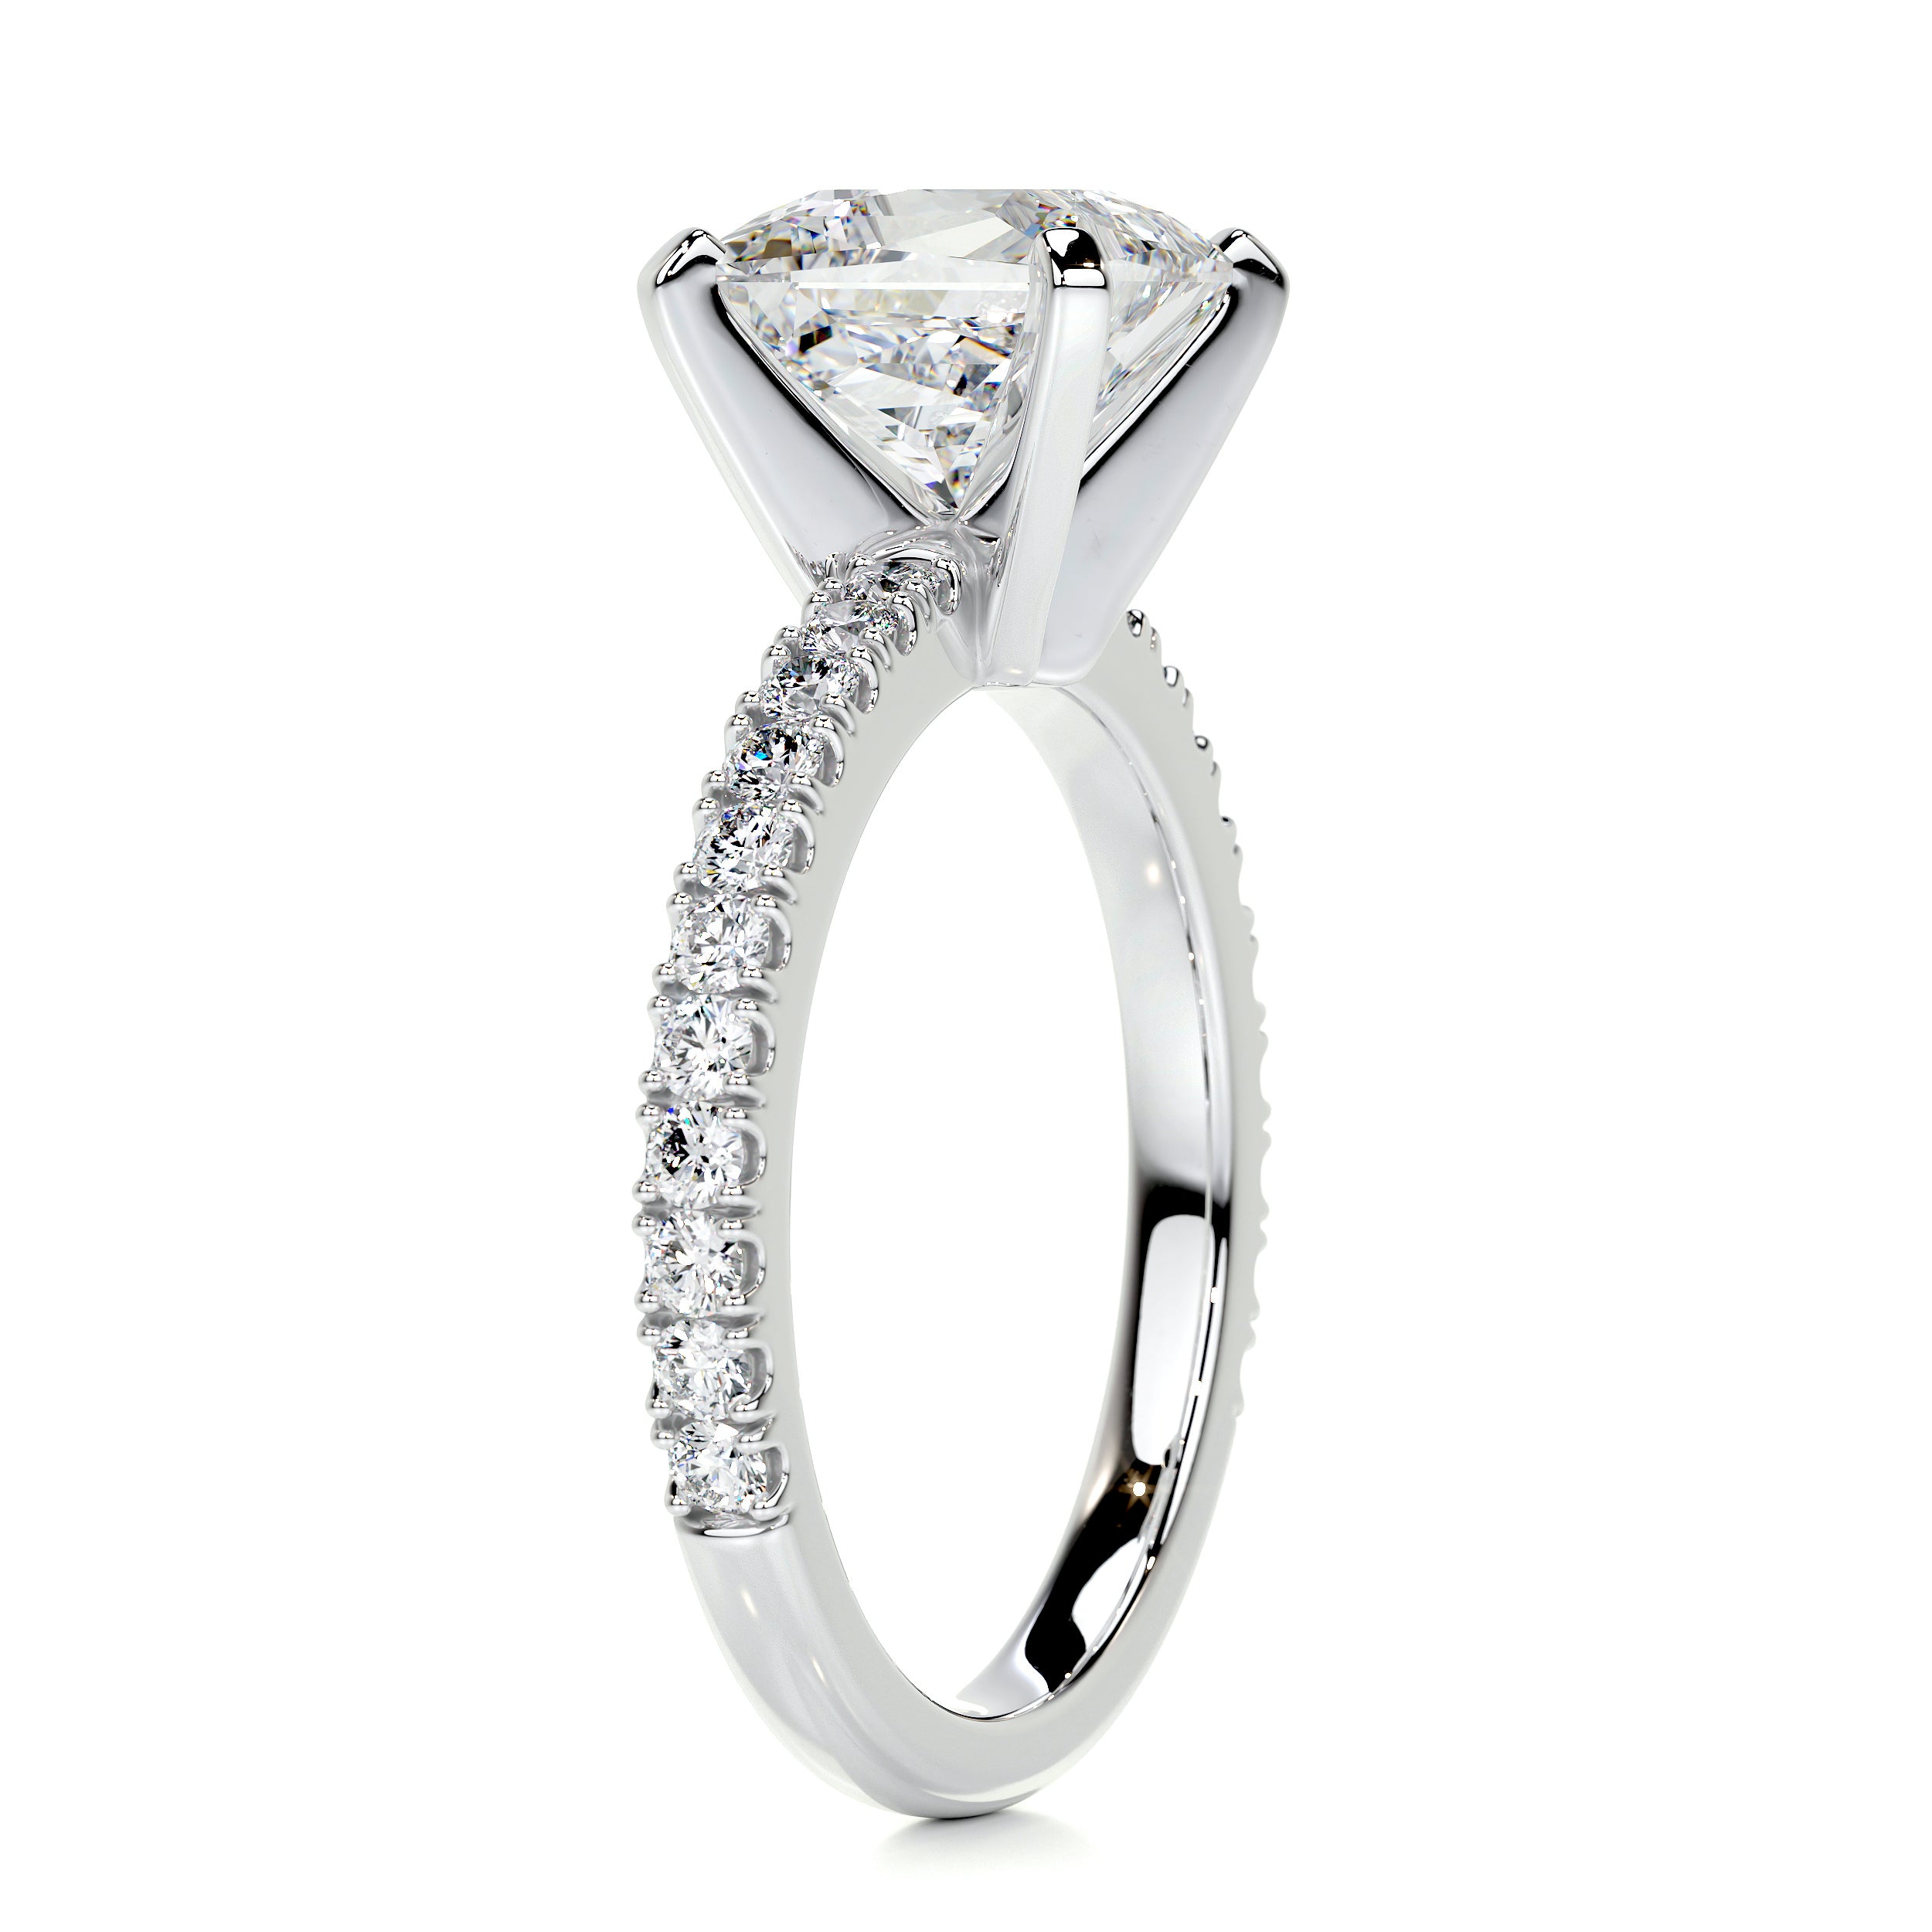 Stephanie Diamond Engagement Ring   (2.3 Carat) -Platinum